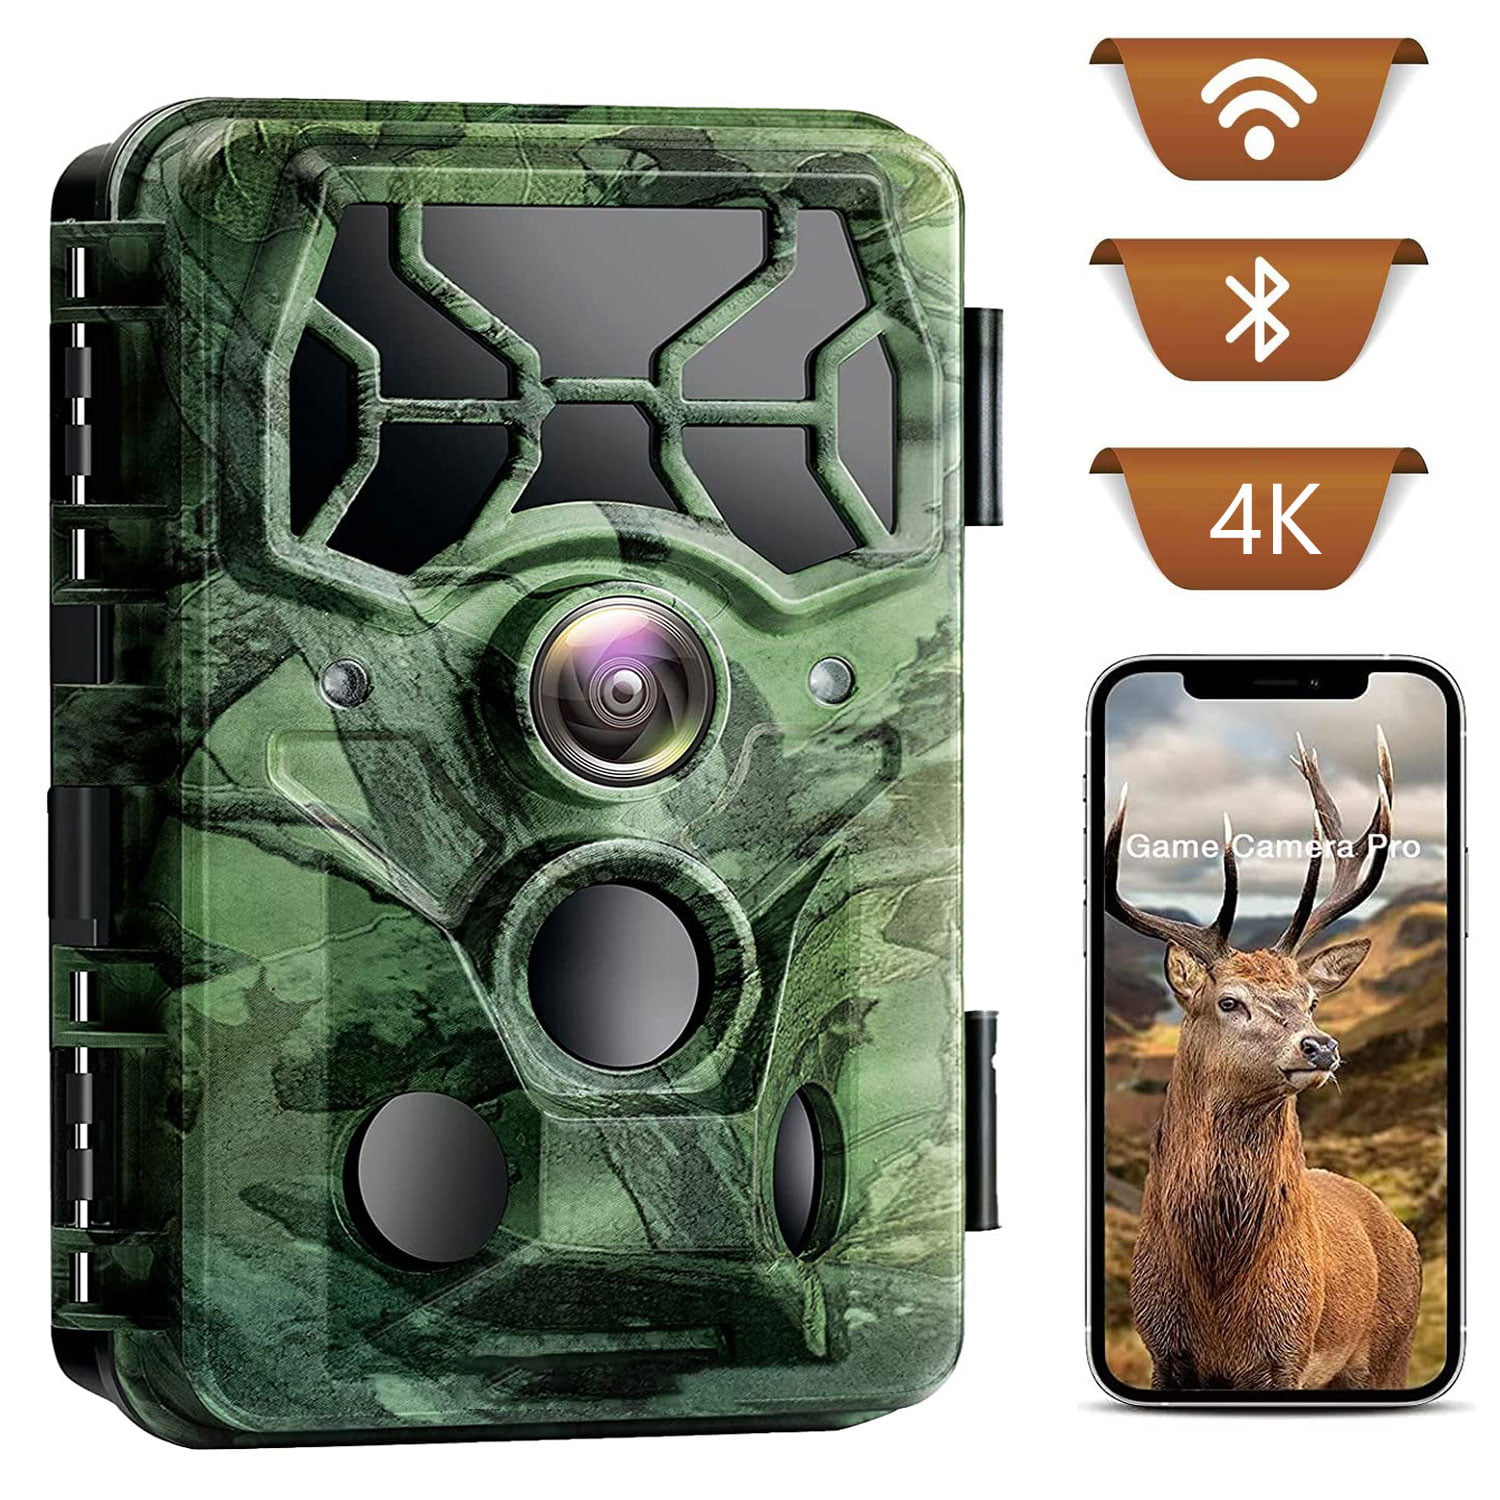 SONY 4K WIFI Bluetooth Trail Camera 30MP Hunting Wildlife IR Night Vision IP66 